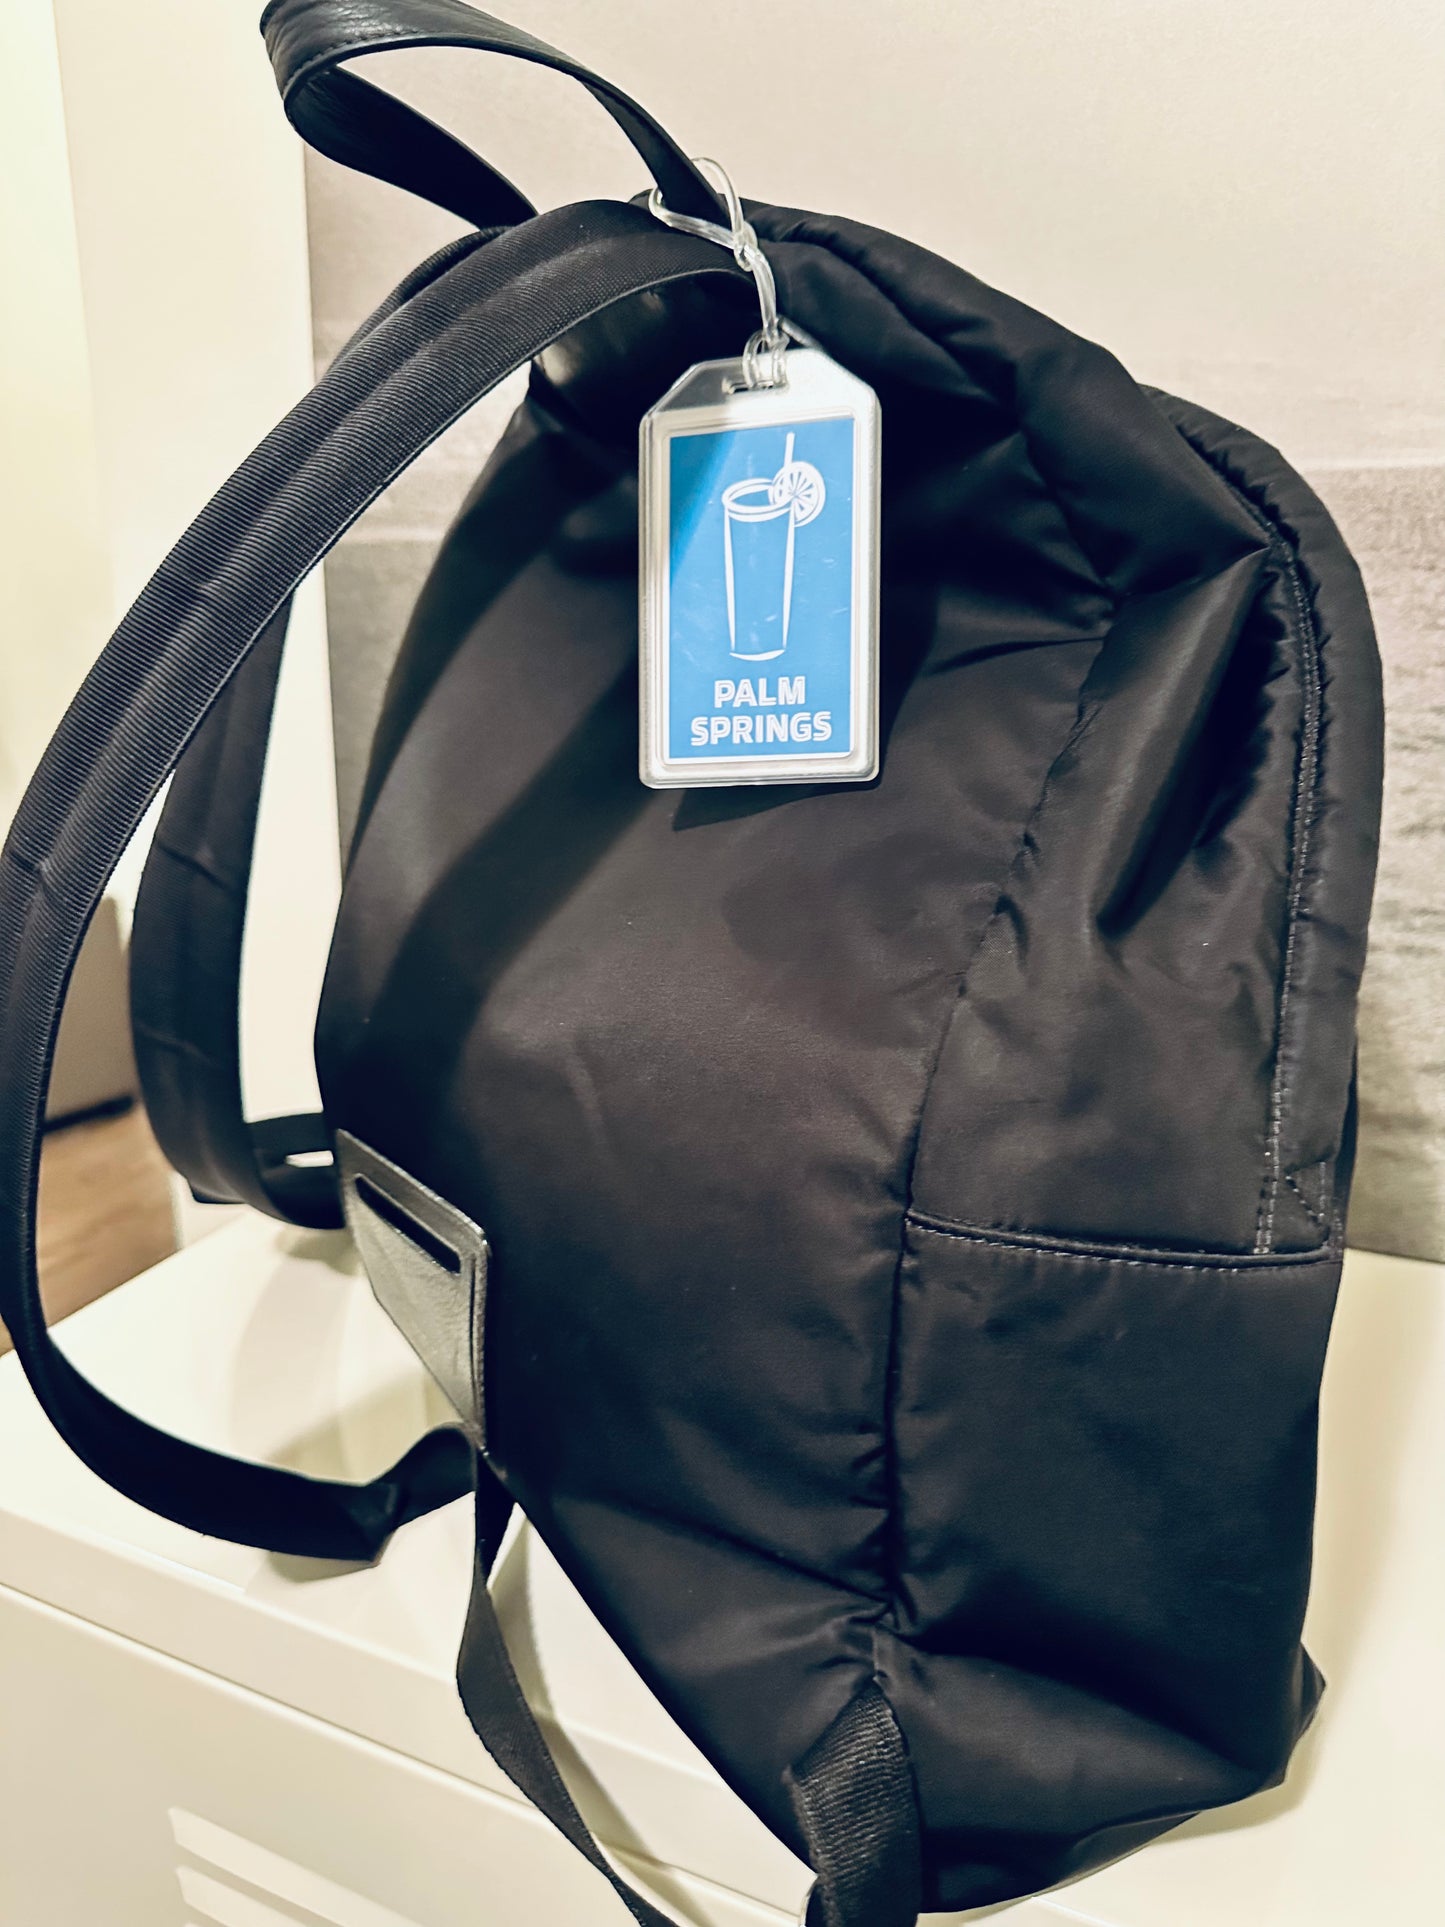 CALIFORNIA CITIES  Luggage & Travel Bag Tags SAN DIEGO/SAN